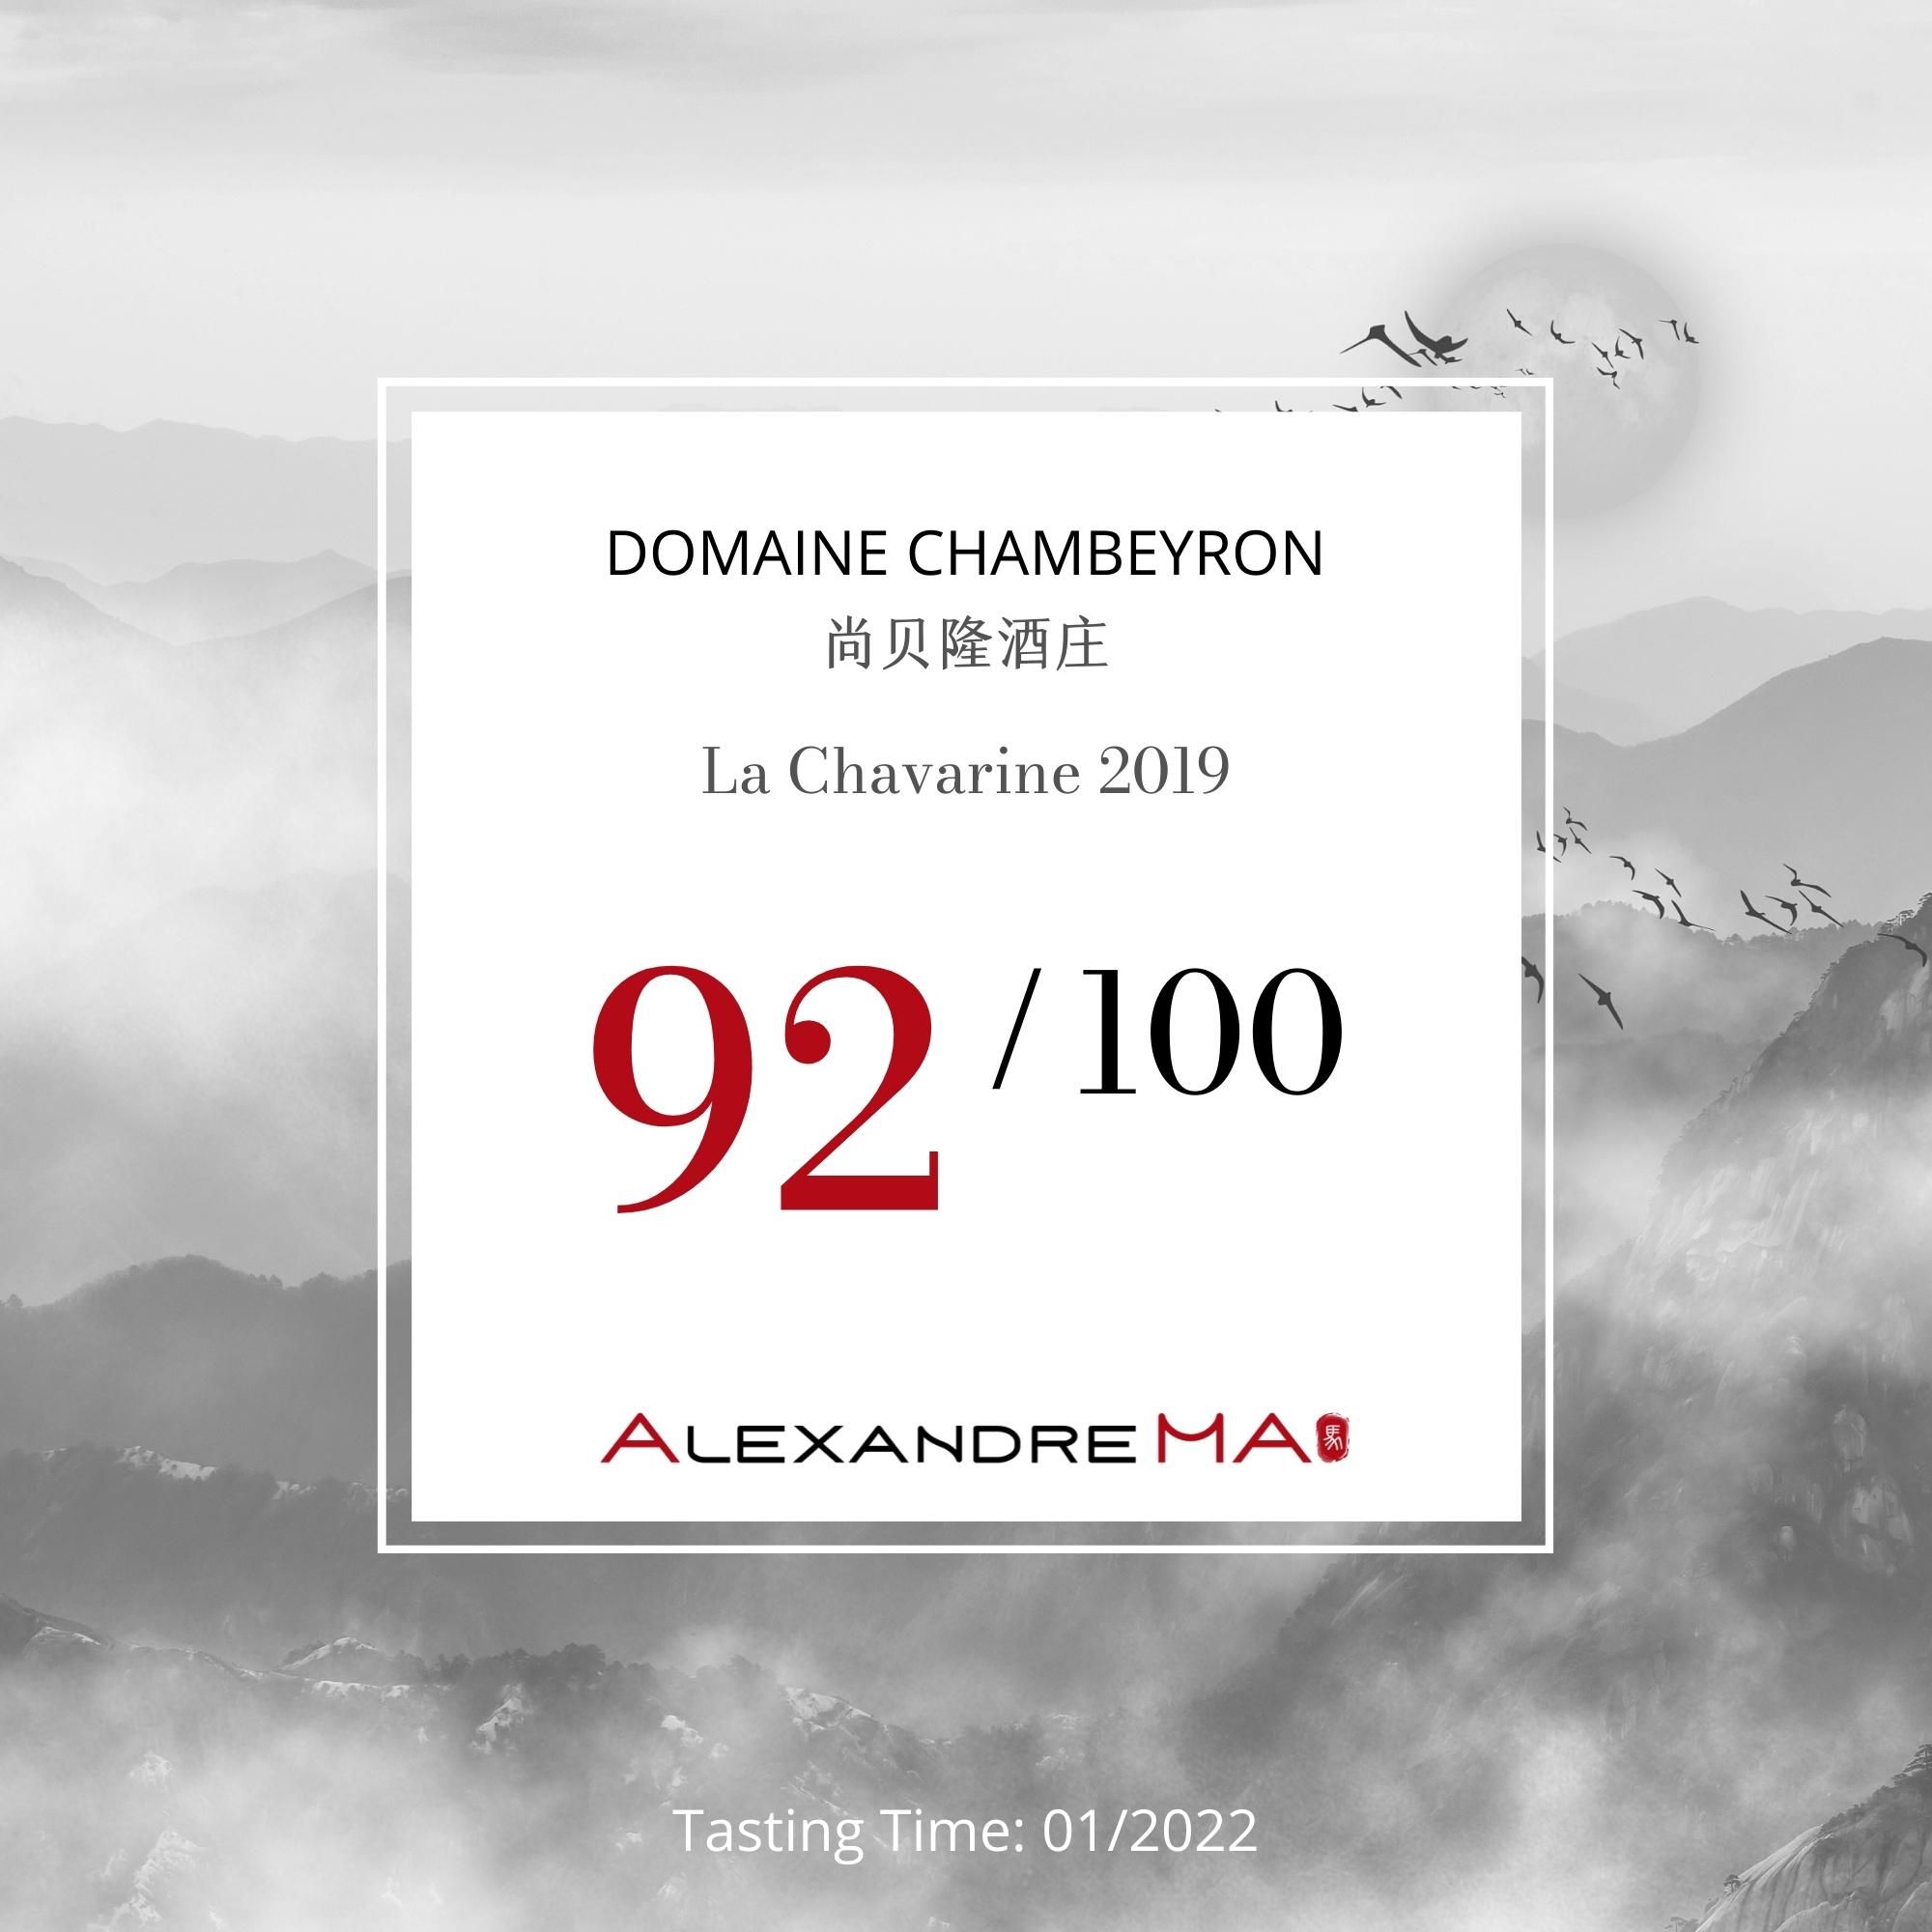 Domaine Chambeyron尚贝隆酒庄-La Chavarine 2019 - Alexandre Ma